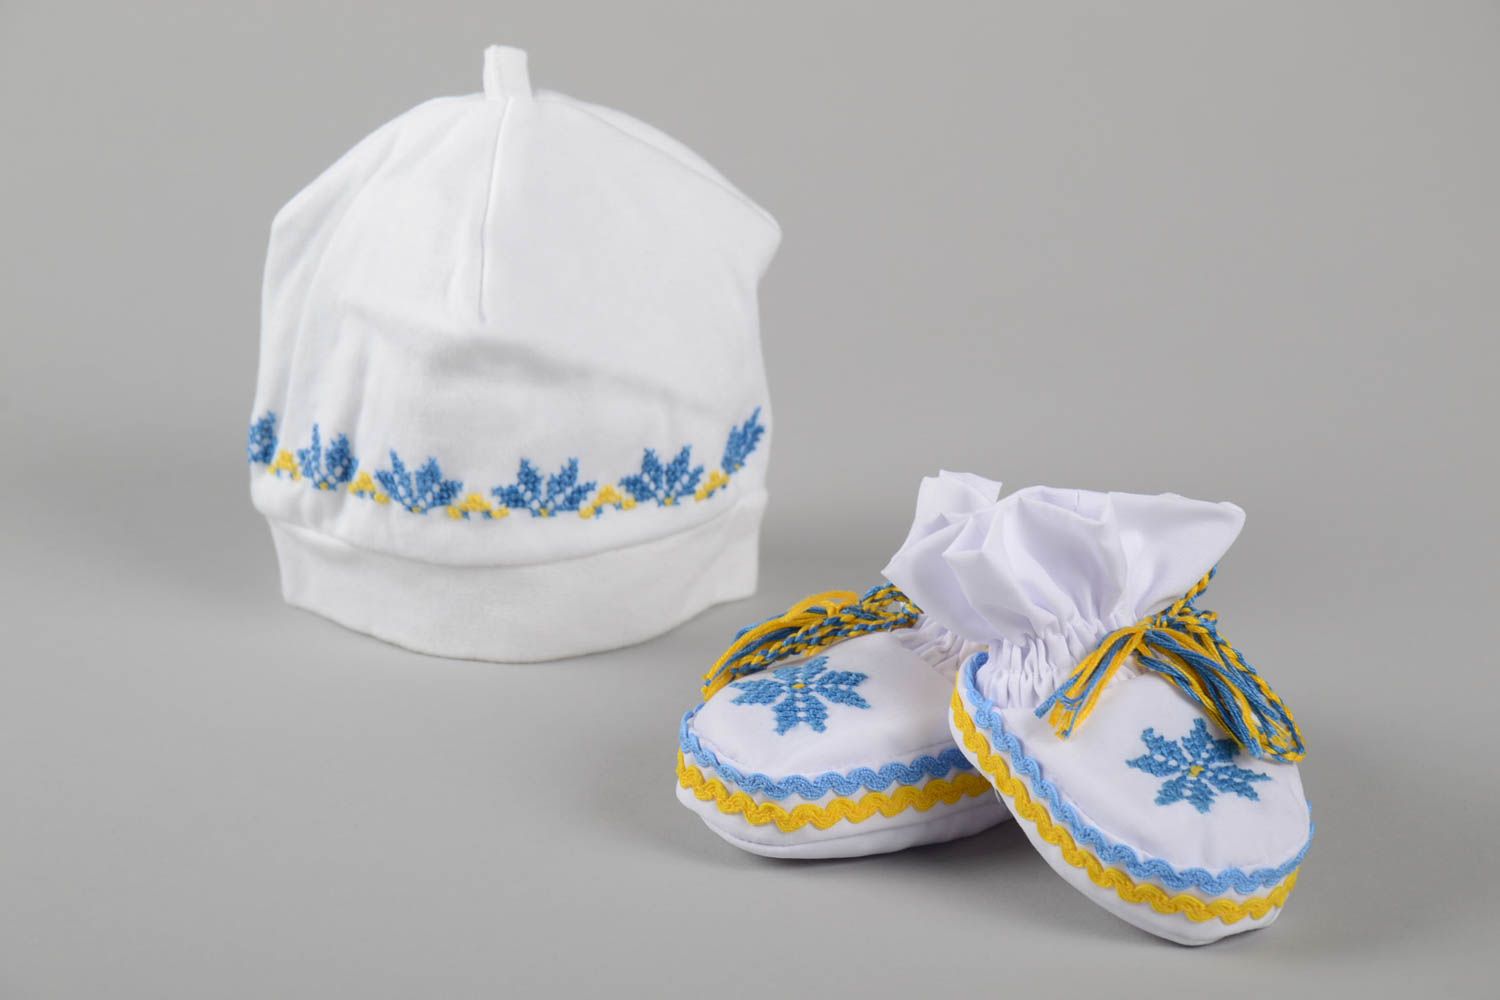 Handmade beautiful babies shoes designer cap for children stylish accessories photo 1